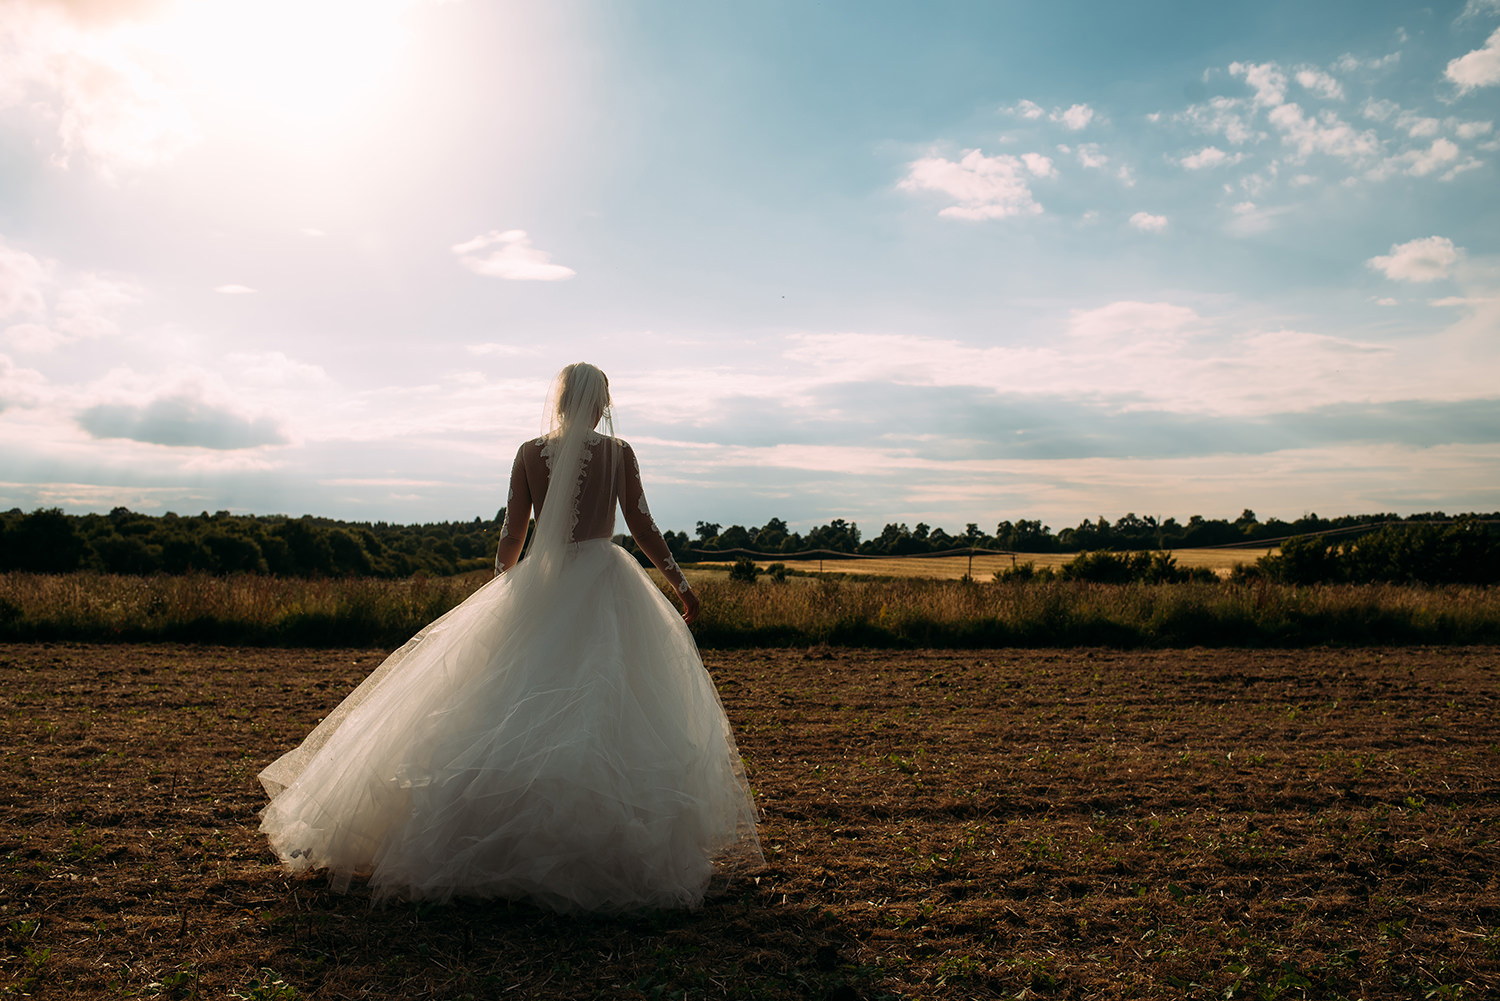  the bride walks into a field 